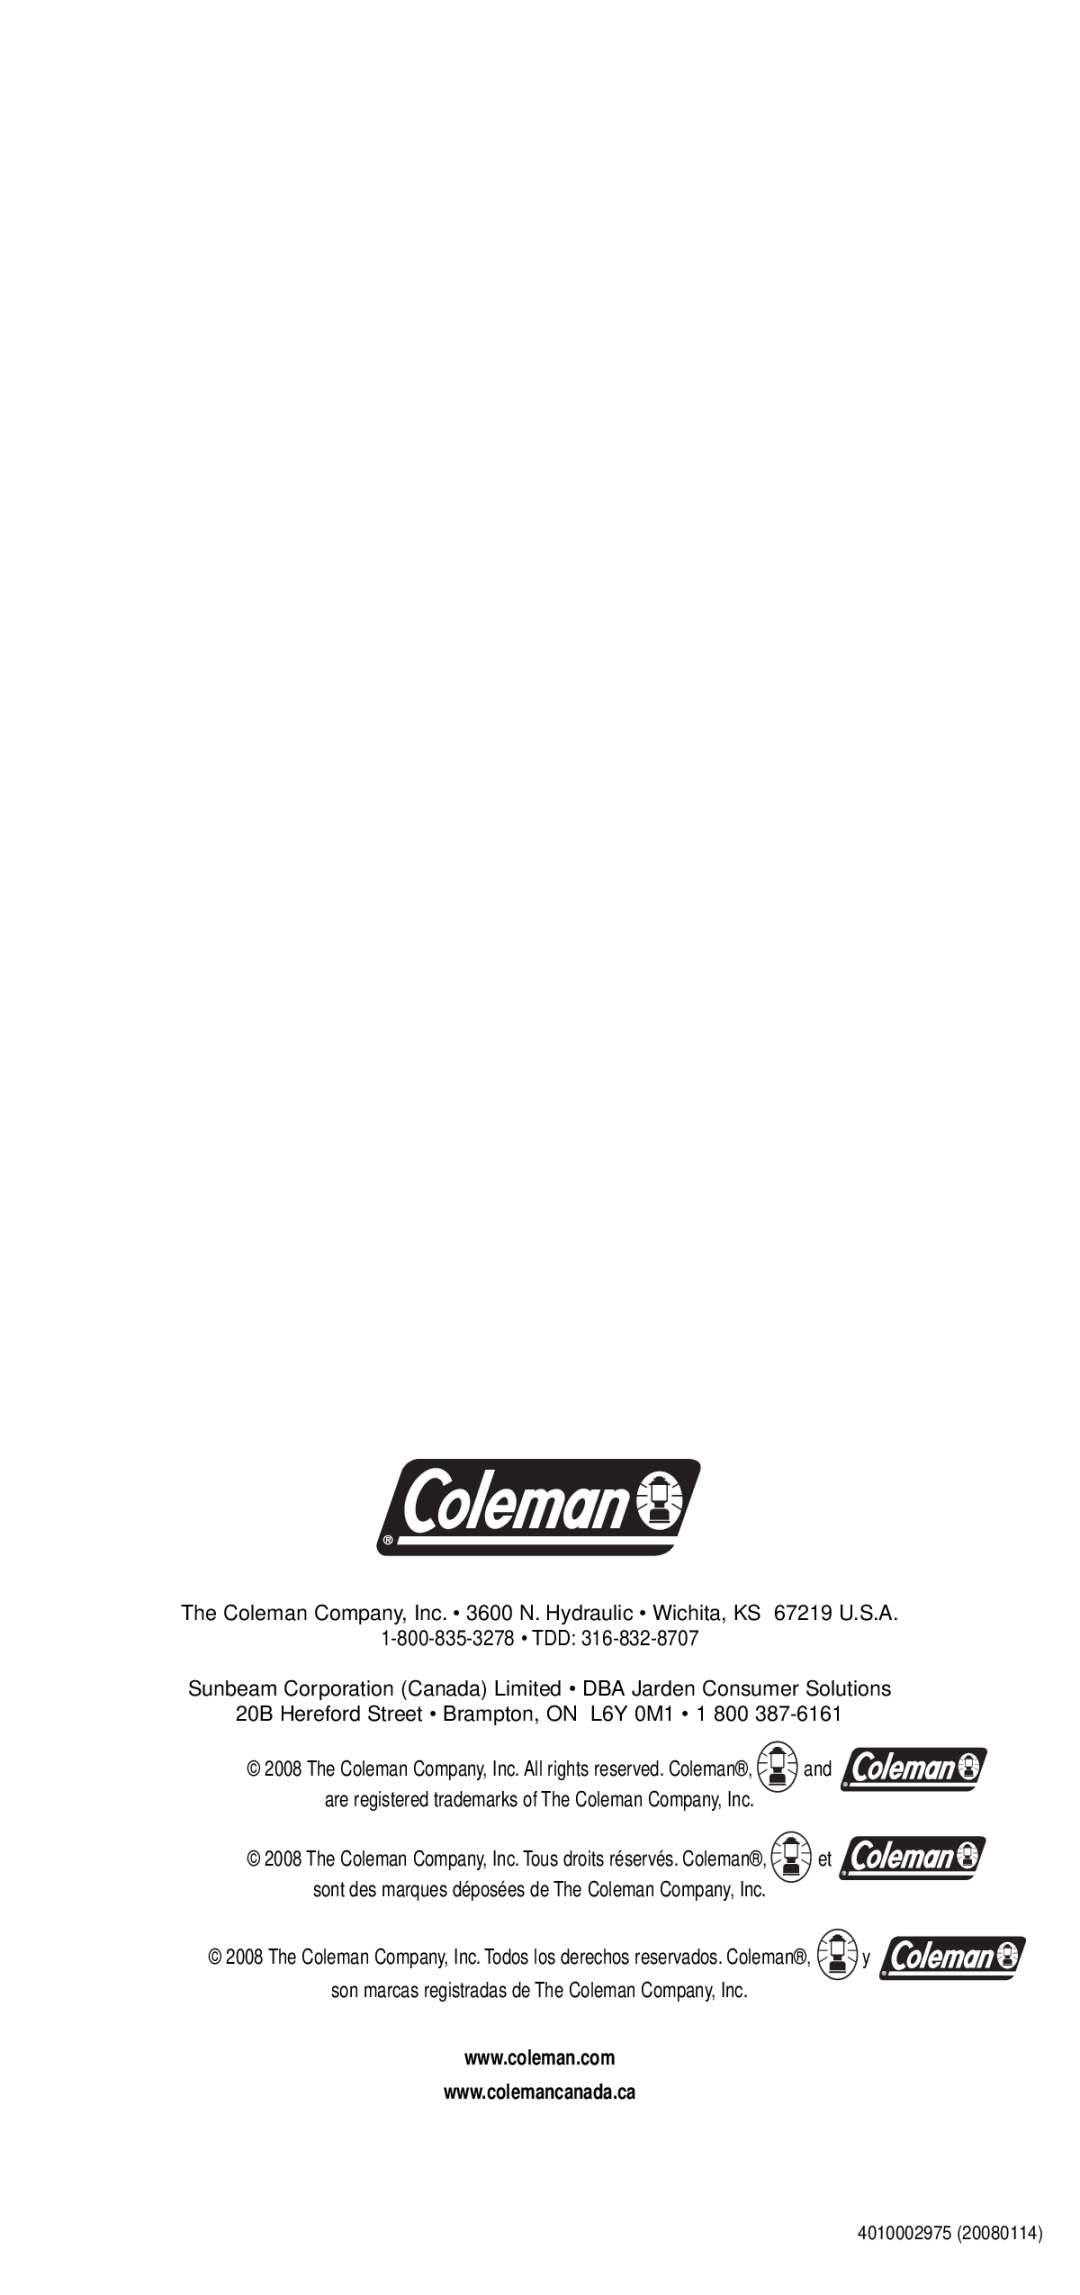 Coleman 5432A Series manual The Coleman Company, Inc. 3600 N. Hydraulic Wichita, KS 67219 U.S.A 